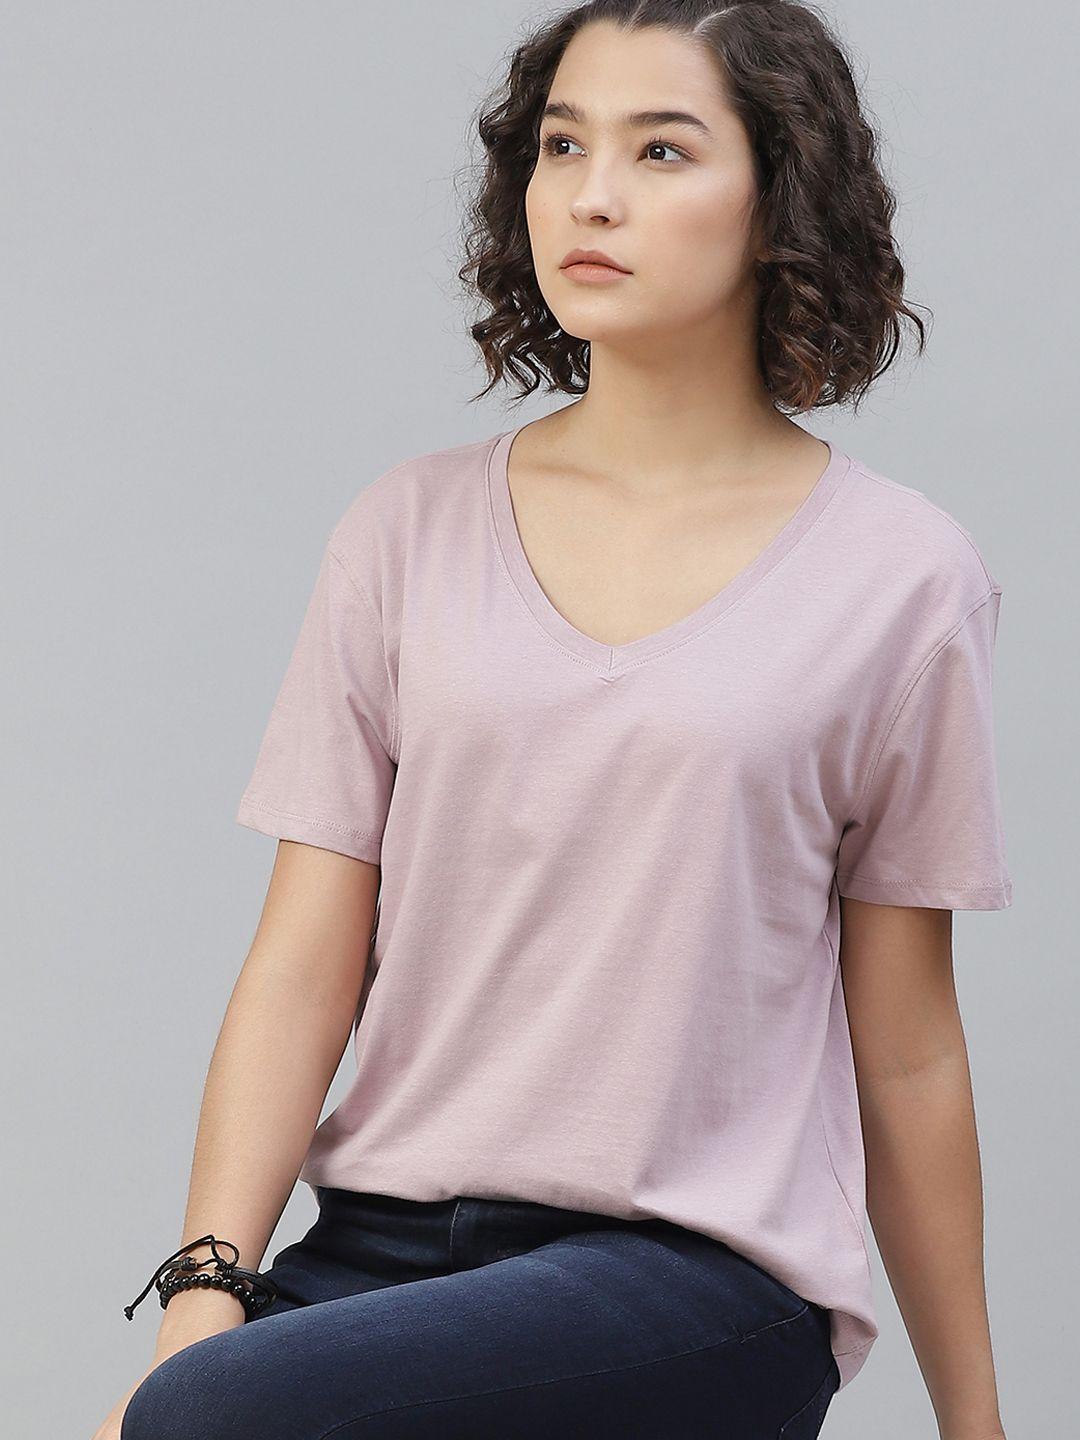 the roadster lifestyle co women lavender solid pure cotton v-neck pure cotton t-shirt